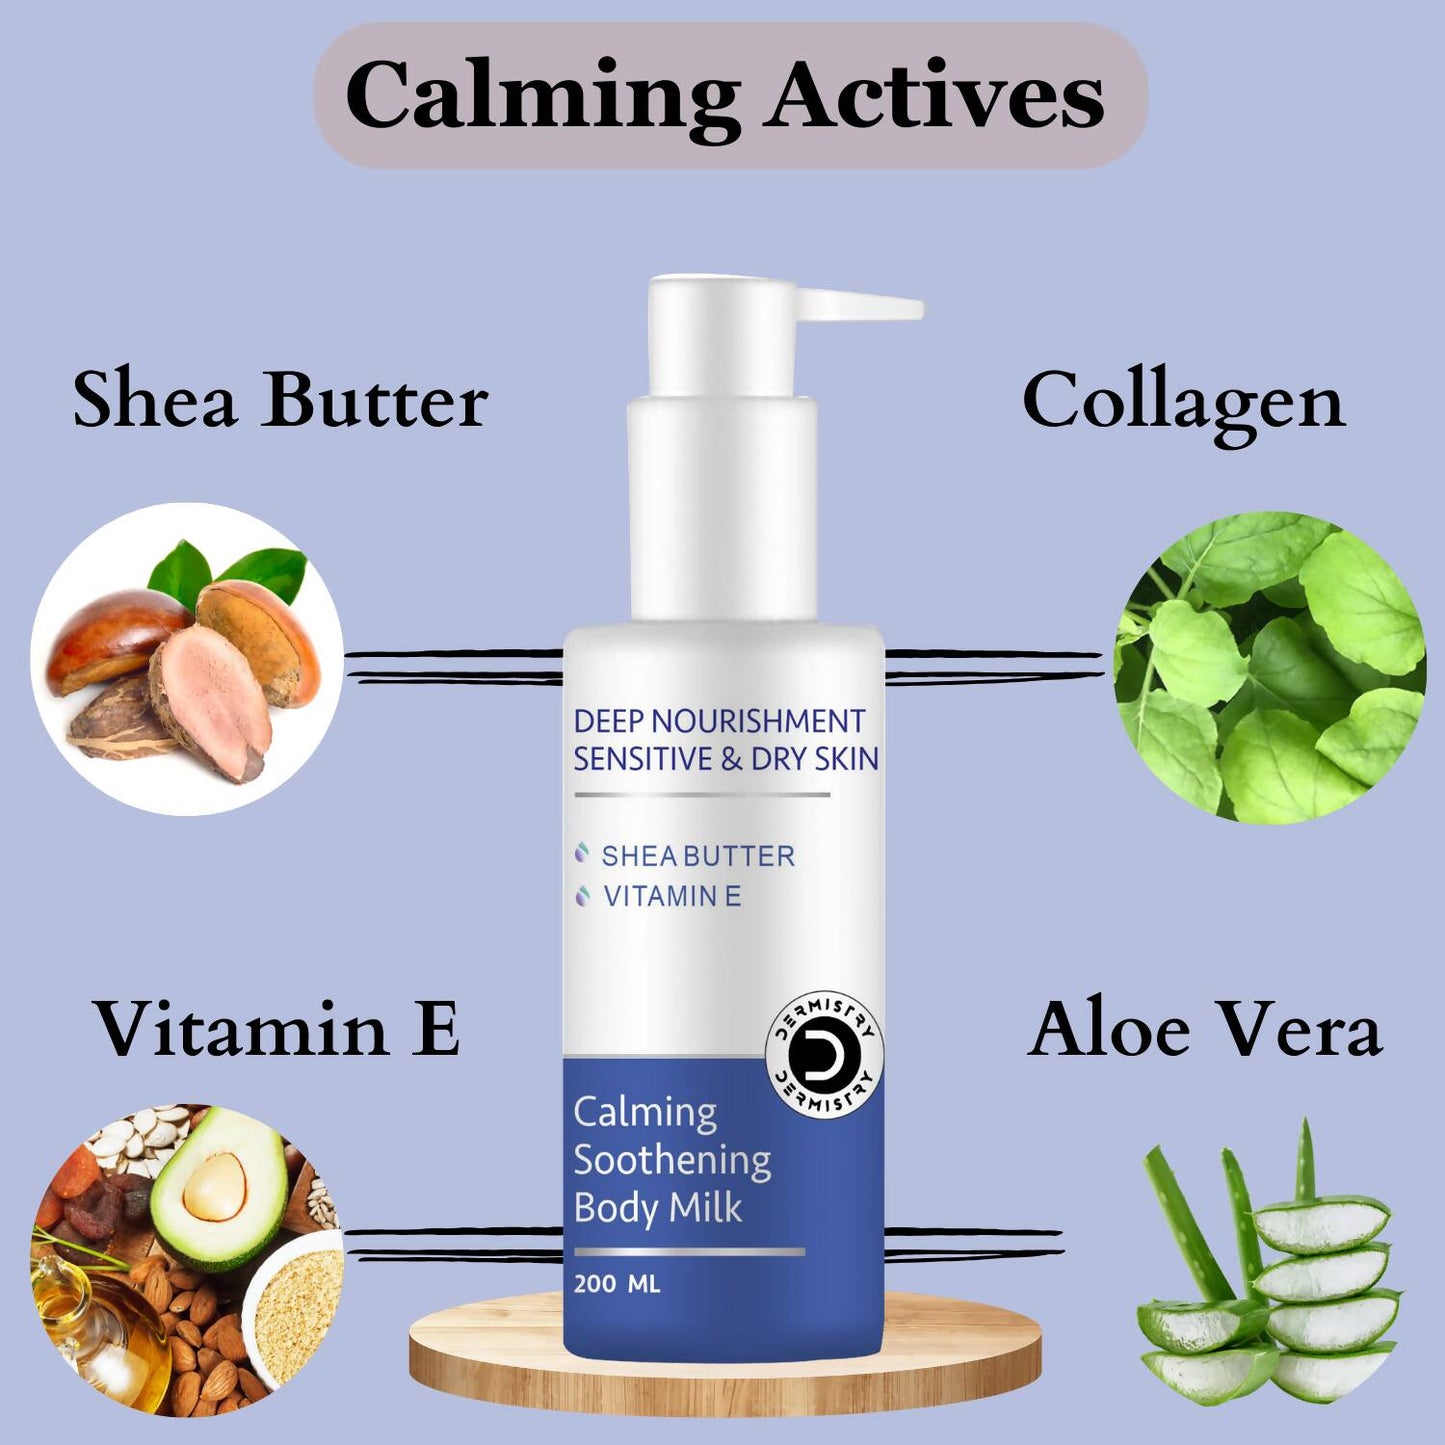 Dermistry Sensitive & Dry Skin Calming Body Milk Lotion & Calming Soothening Face Cream